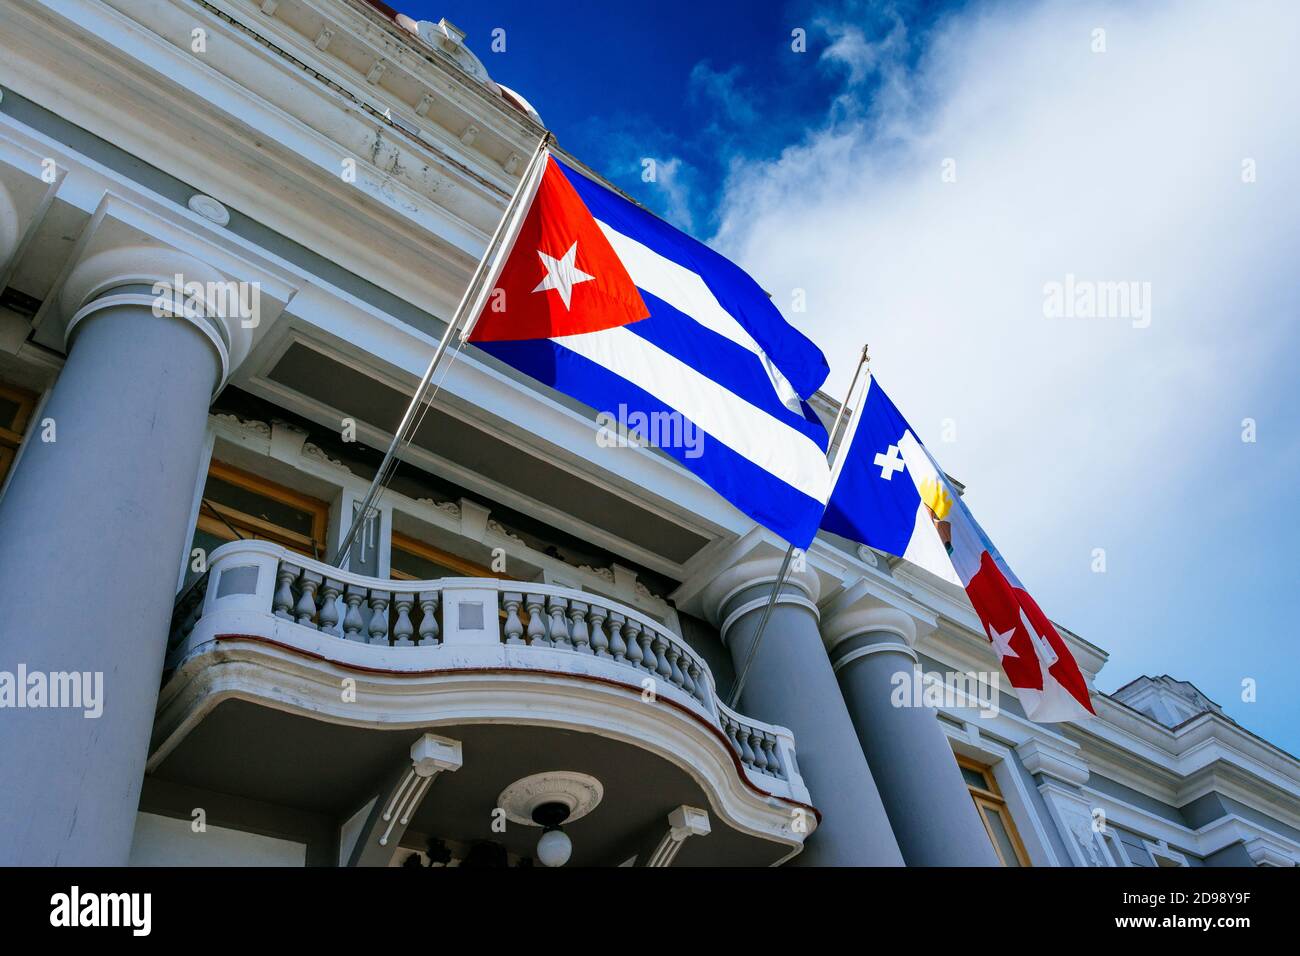 Detail. Cuban flag waving on the facade of Palacio de Gobierno - Government Palace - City Hall and Provincial Museum. Cienfuegos, Cuba, Latin America Stock Photo